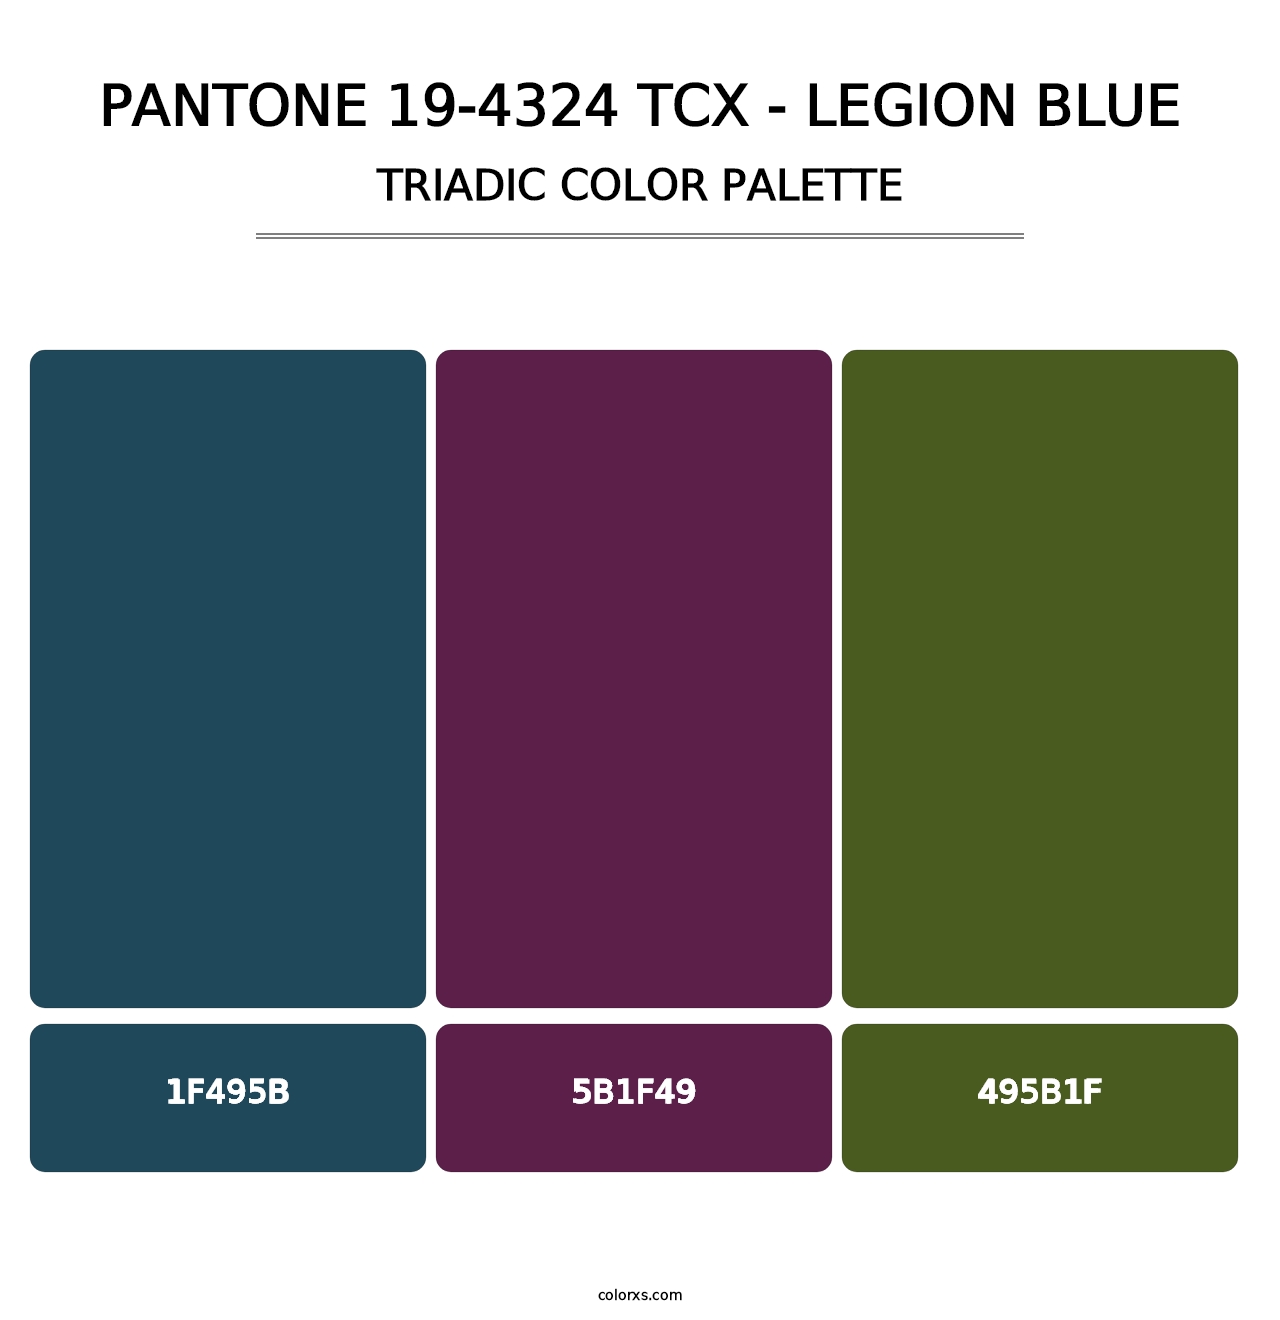 PANTONE 19-4324 TCX - Legion Blue - Triadic Color Palette